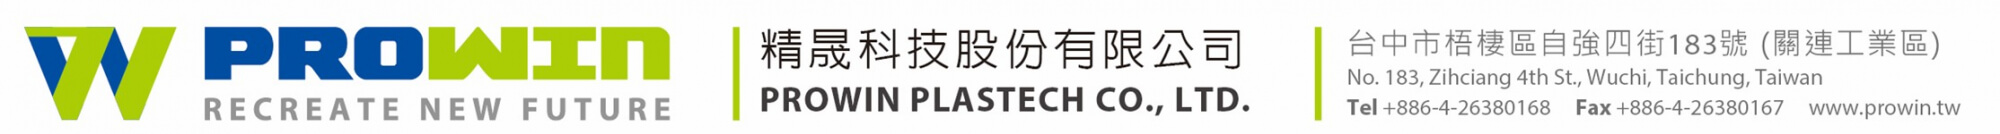 PROWIN PLASTECH CO., LTD.  PRM-Taiwan B2B Marketplace